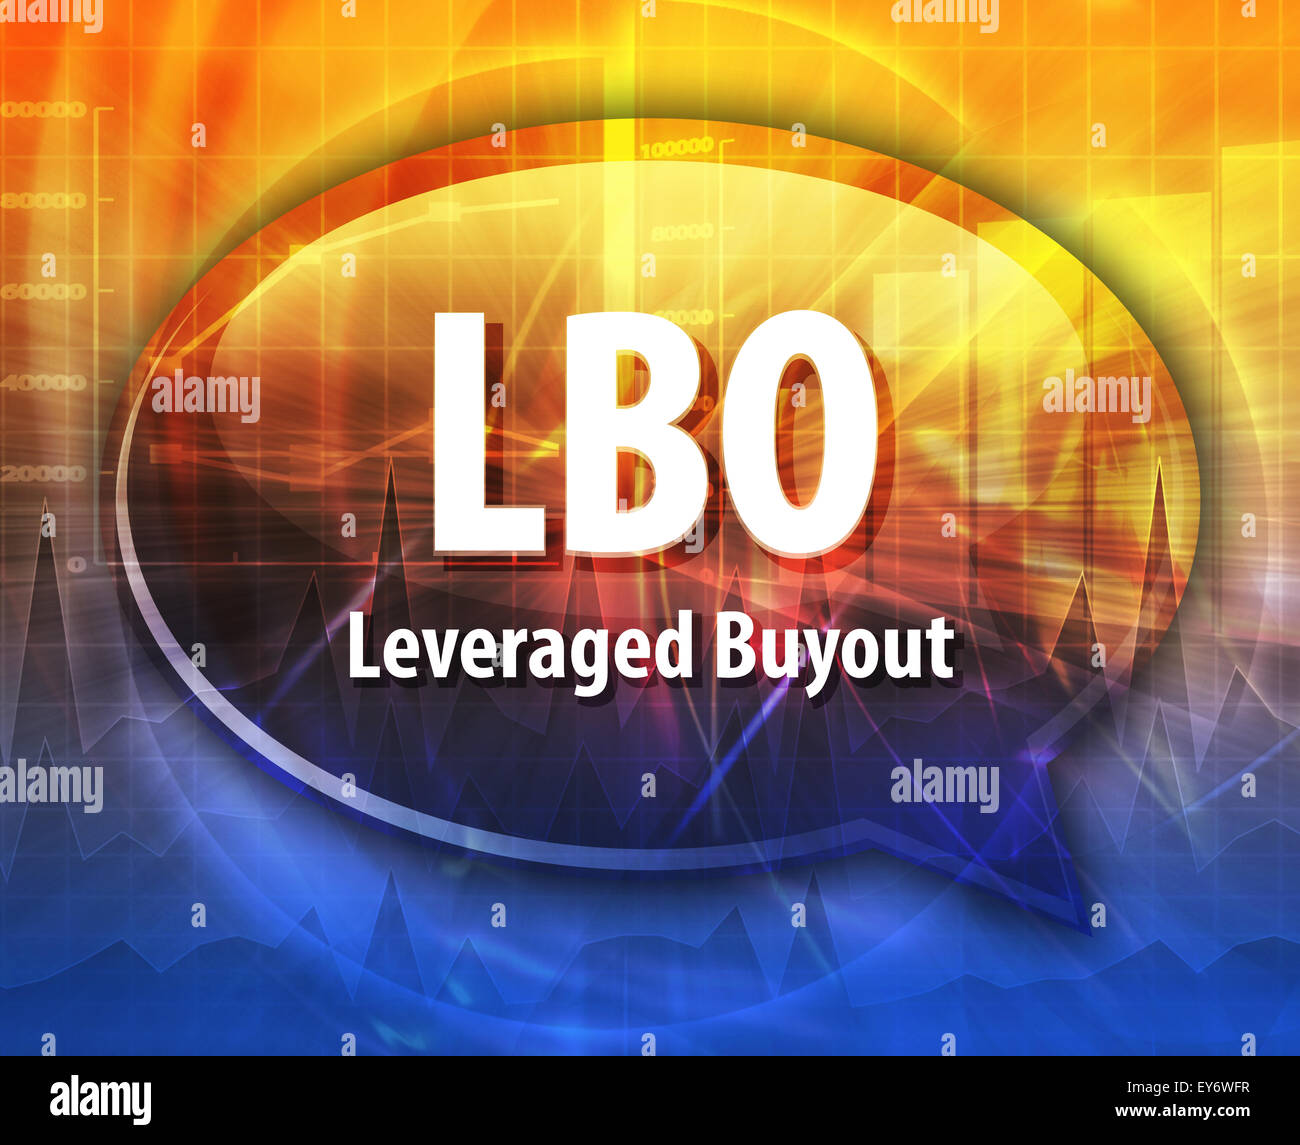 word speech bubble illustration of business acronym term LBO Leveraged Buyout Stock Photo